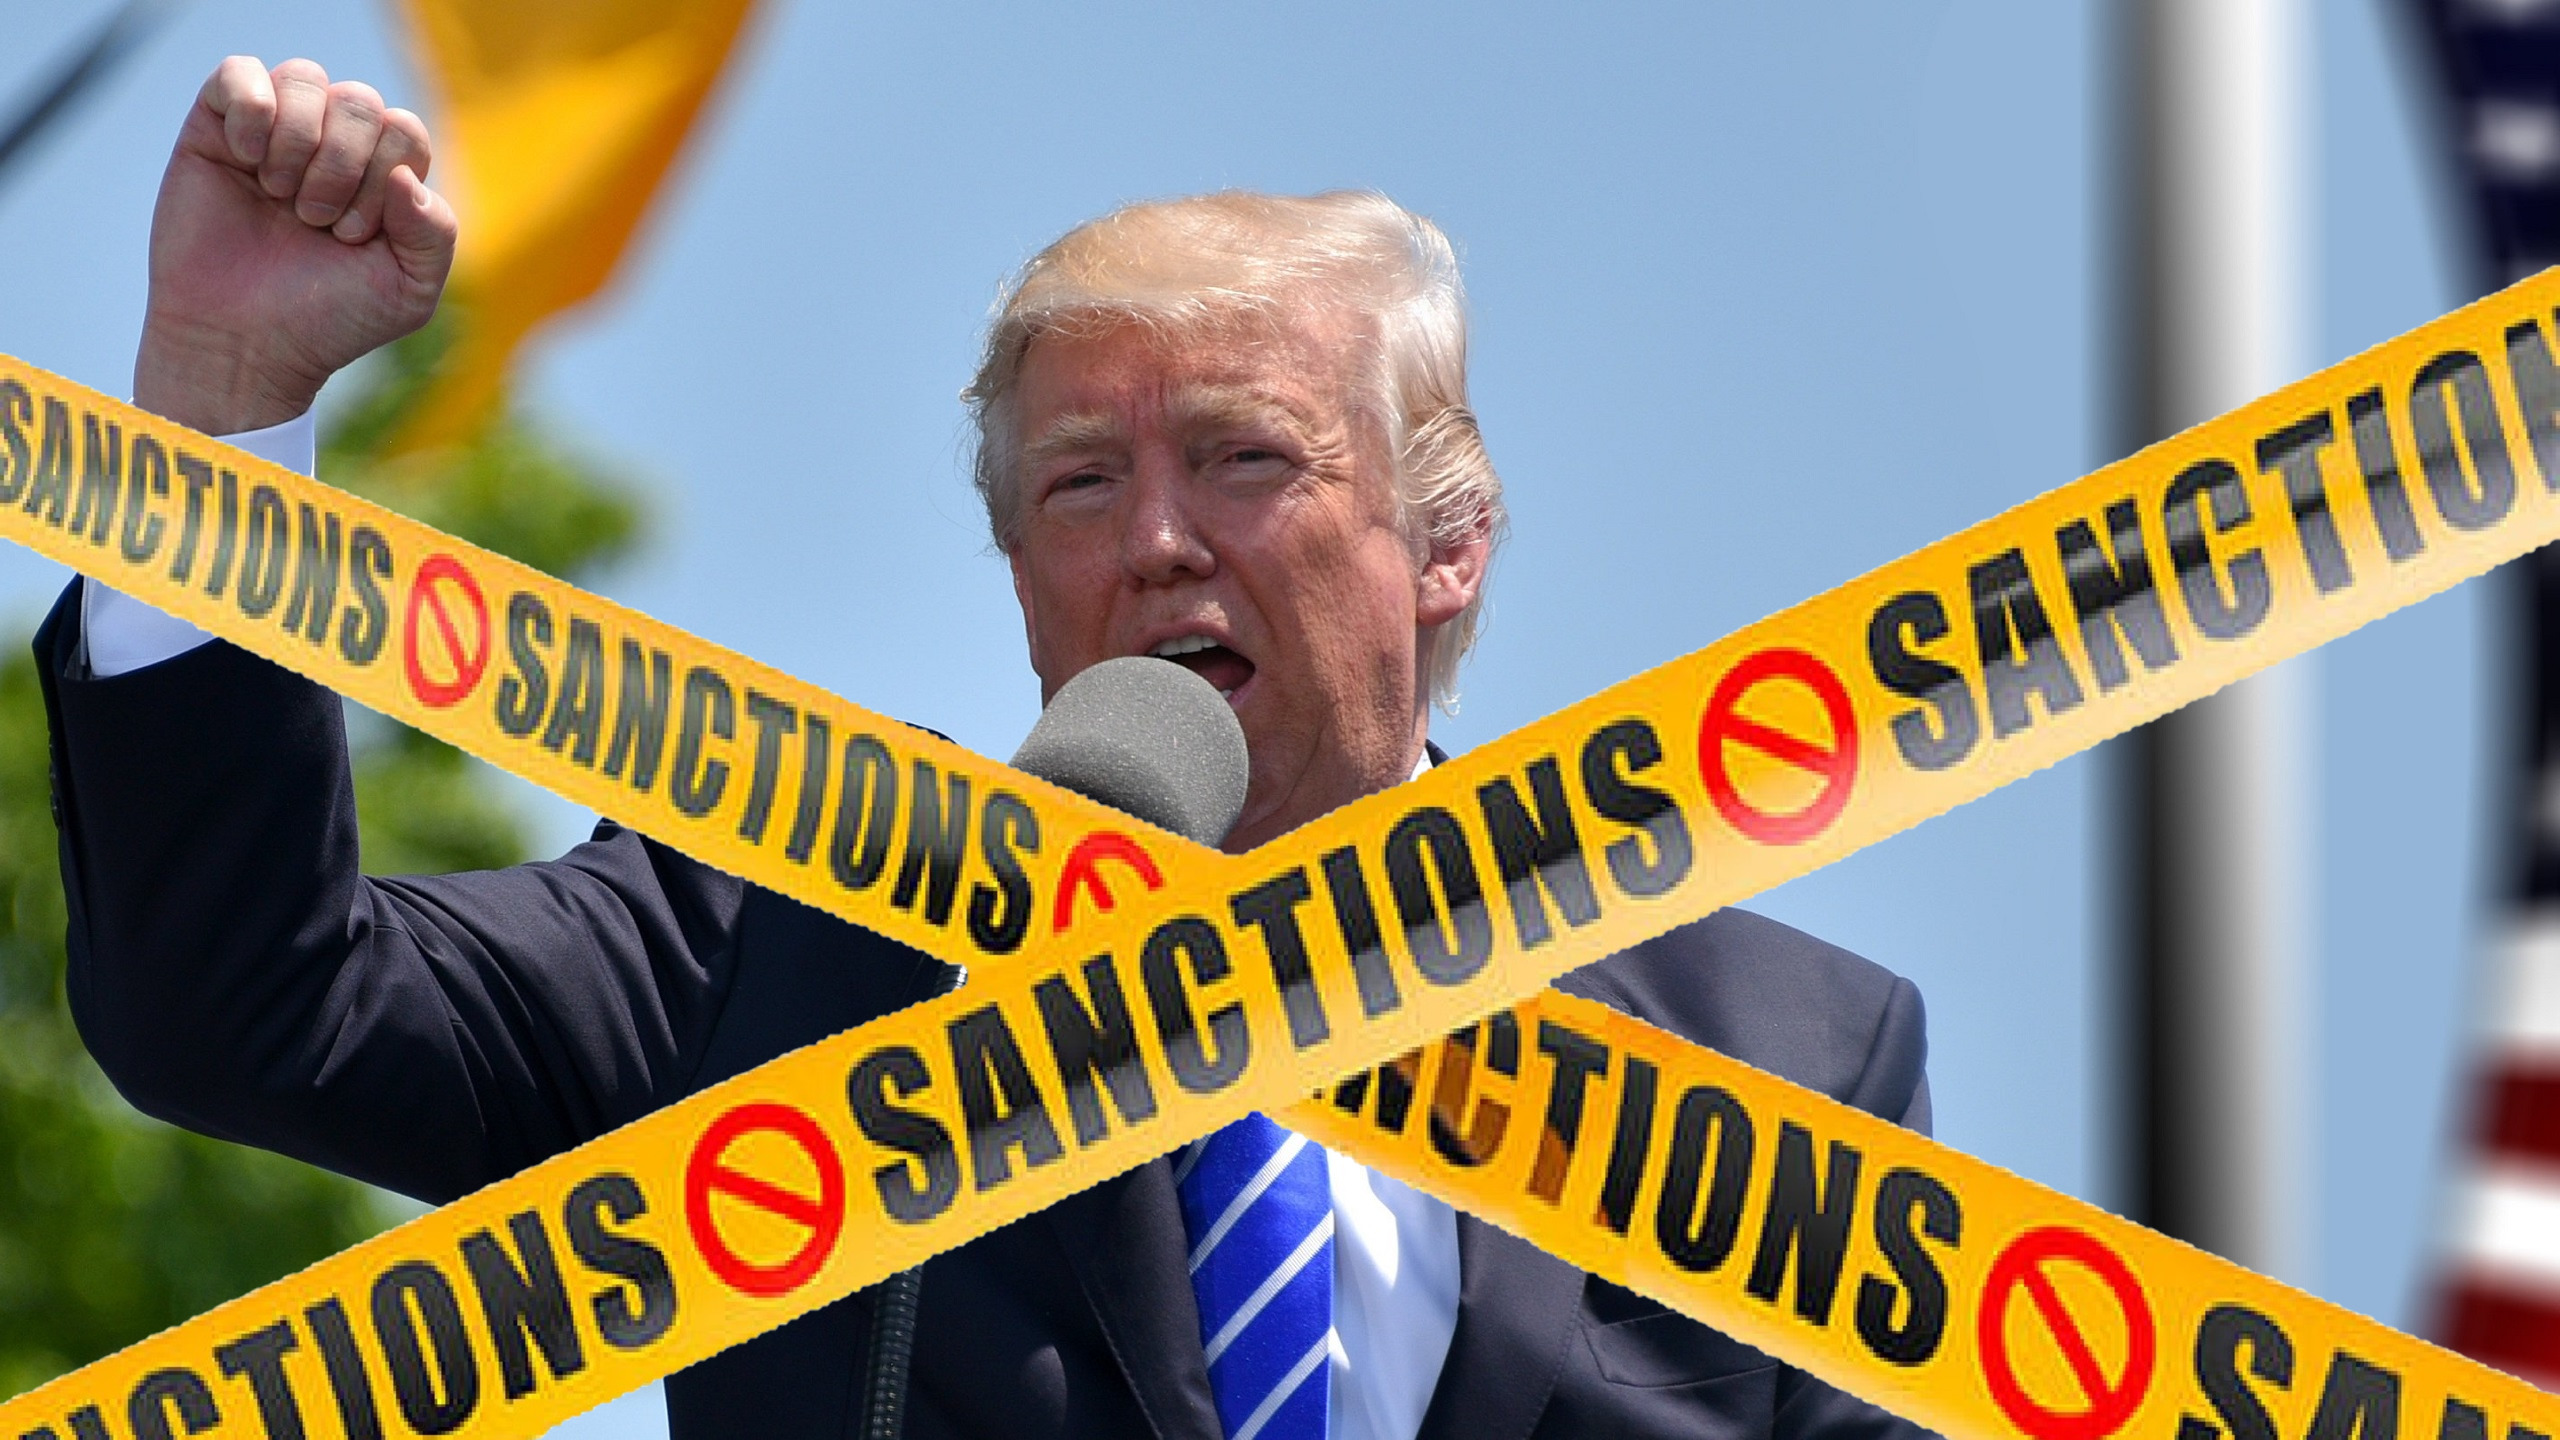 Tehran Sanctions President Trump, Senior Officials on Final Day